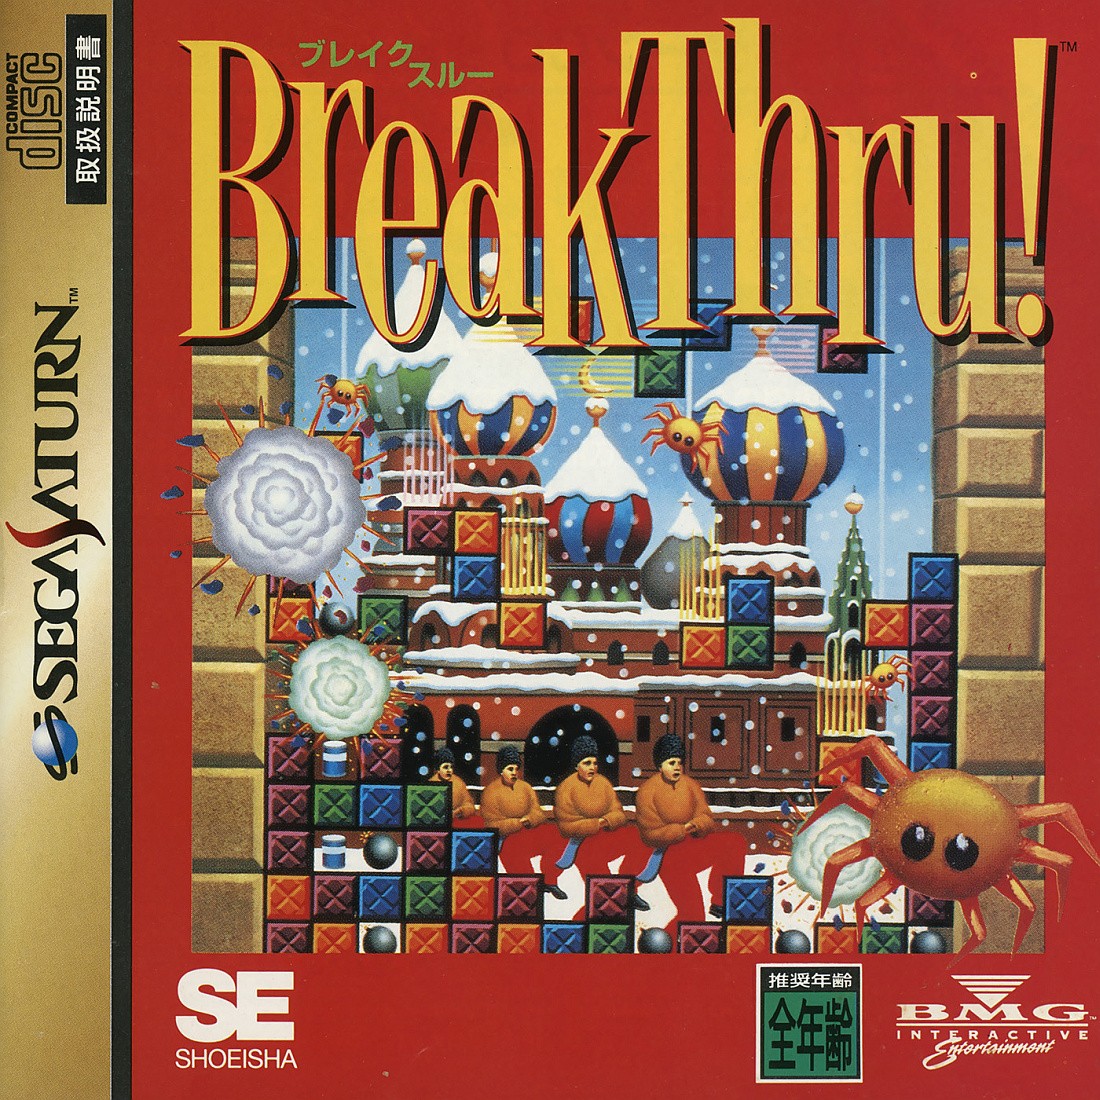 Capa do jogo BreakThru!